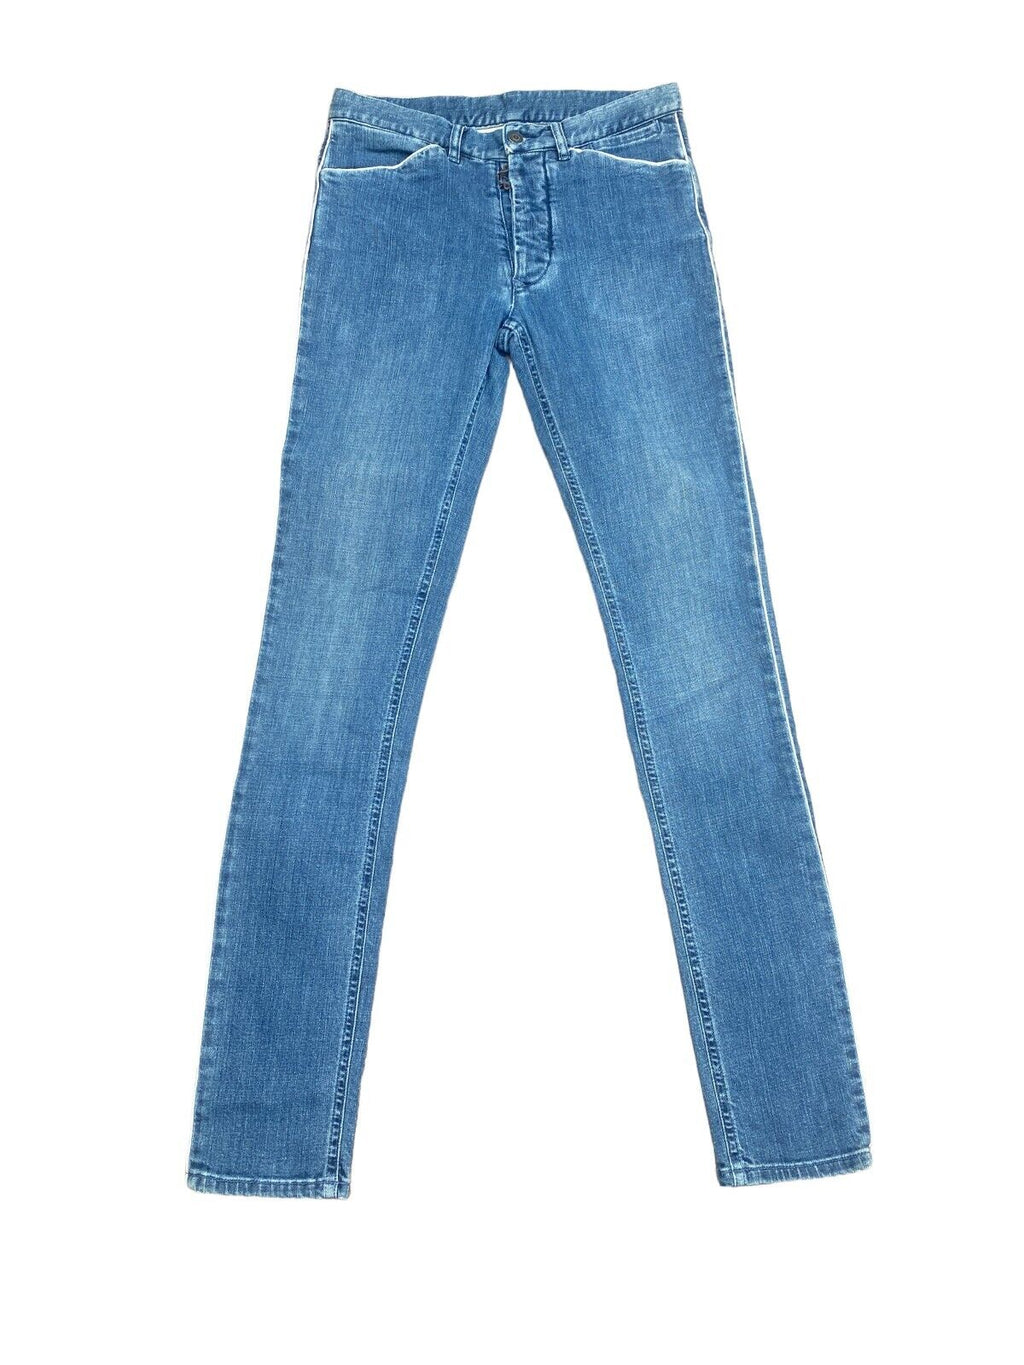 SS 2008 Light blue denim jeans